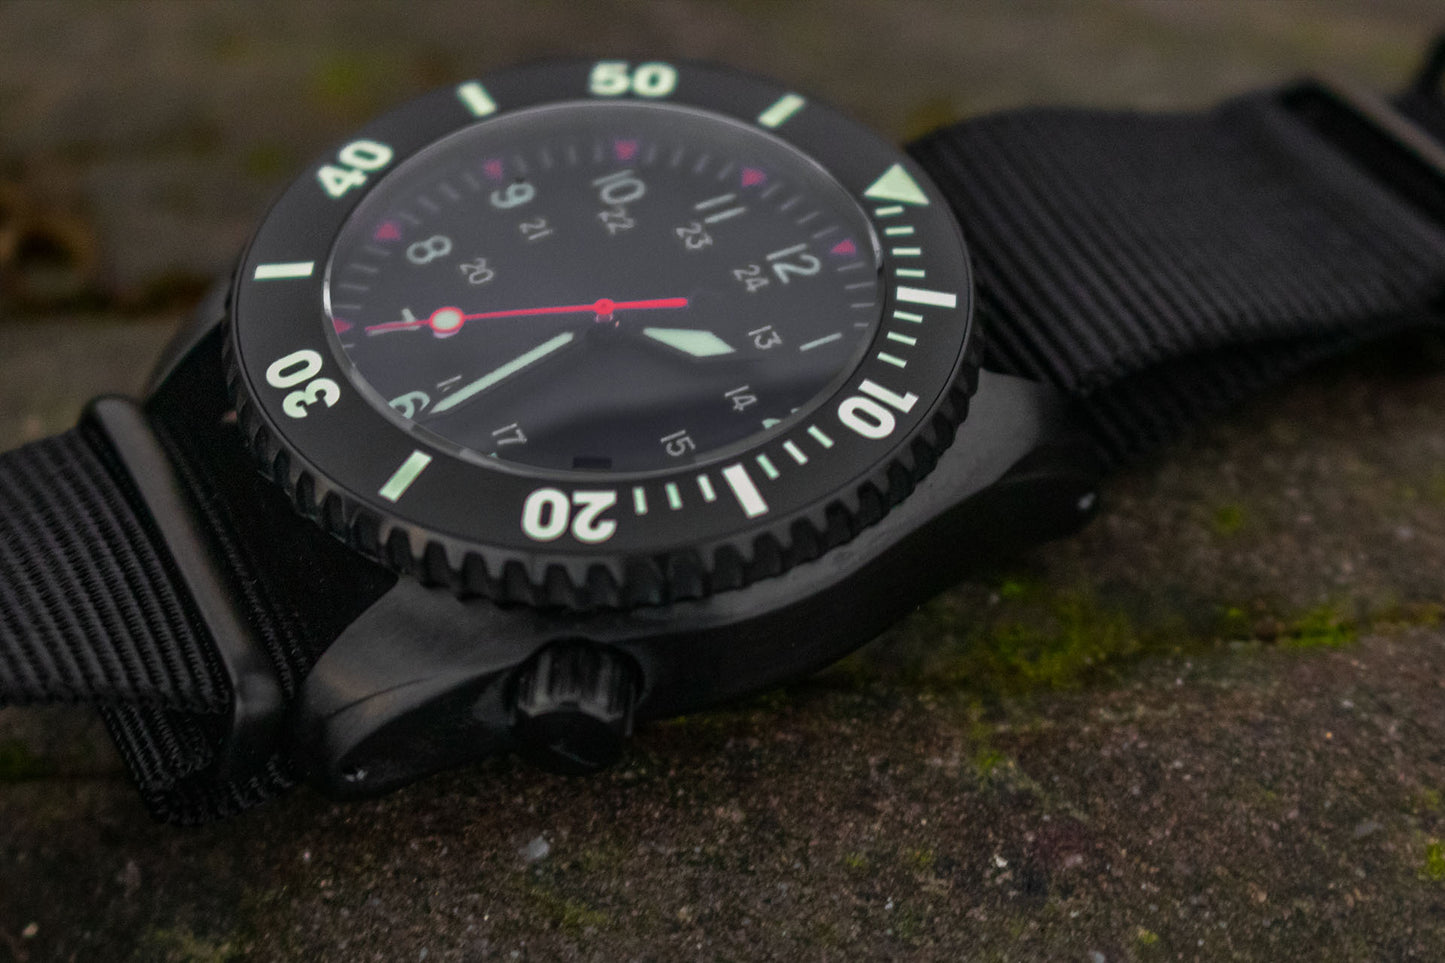 Enoksen 'Deep Dive' E11/SF - Diver's Watch - 44mm